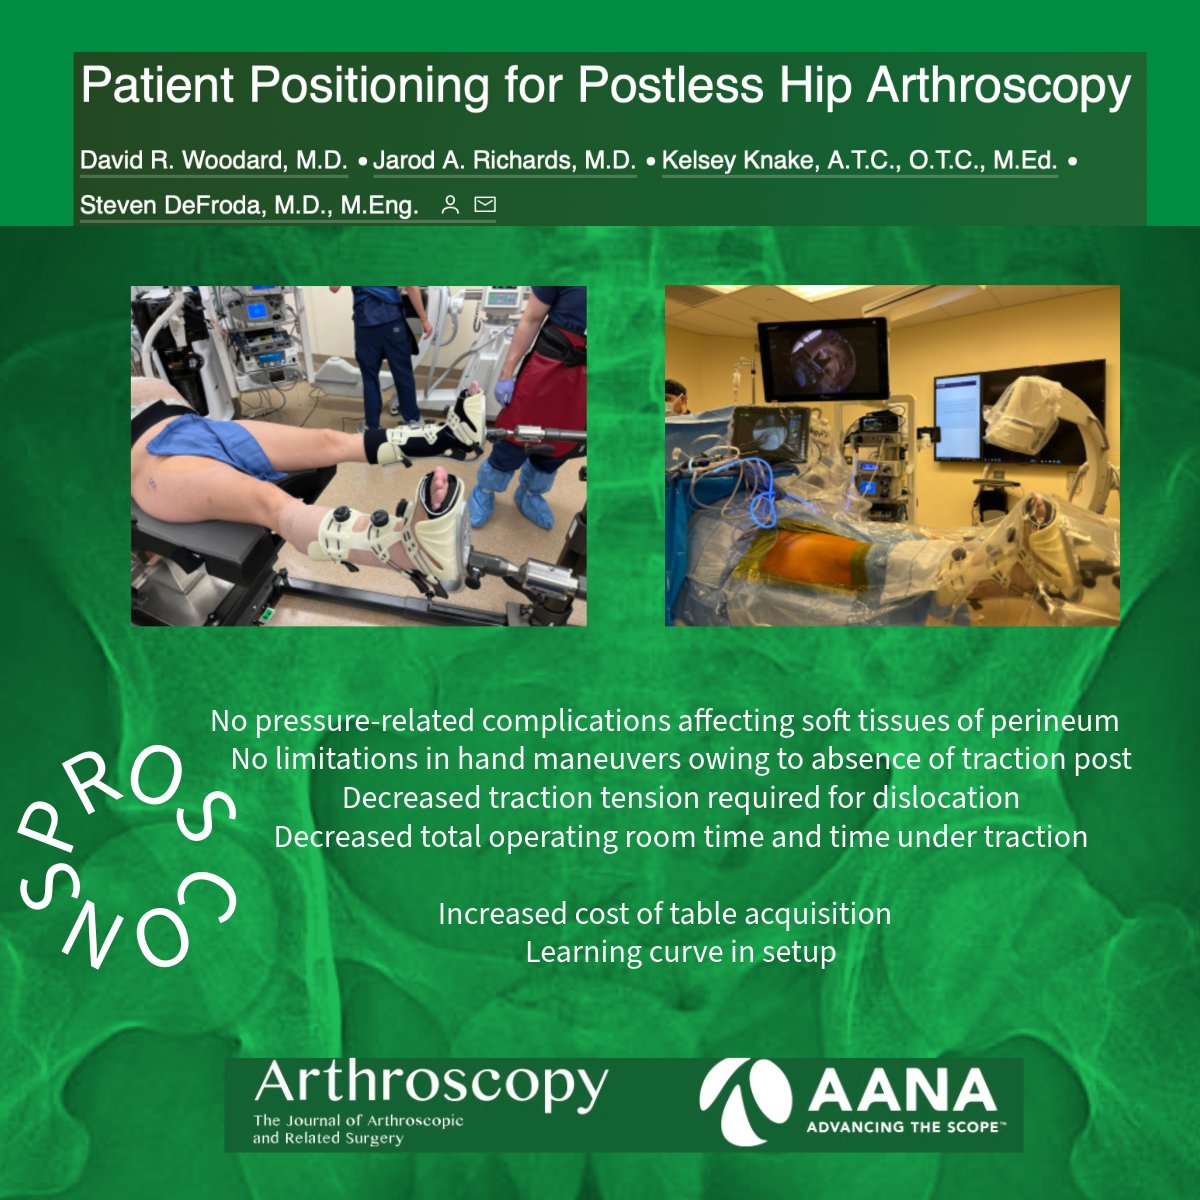 Check out this article describing patient positioning for postless hip arthroscopy! #HipArthroscopy @DeFrodaSportsMD ow.ly/4Bak50RrtQk